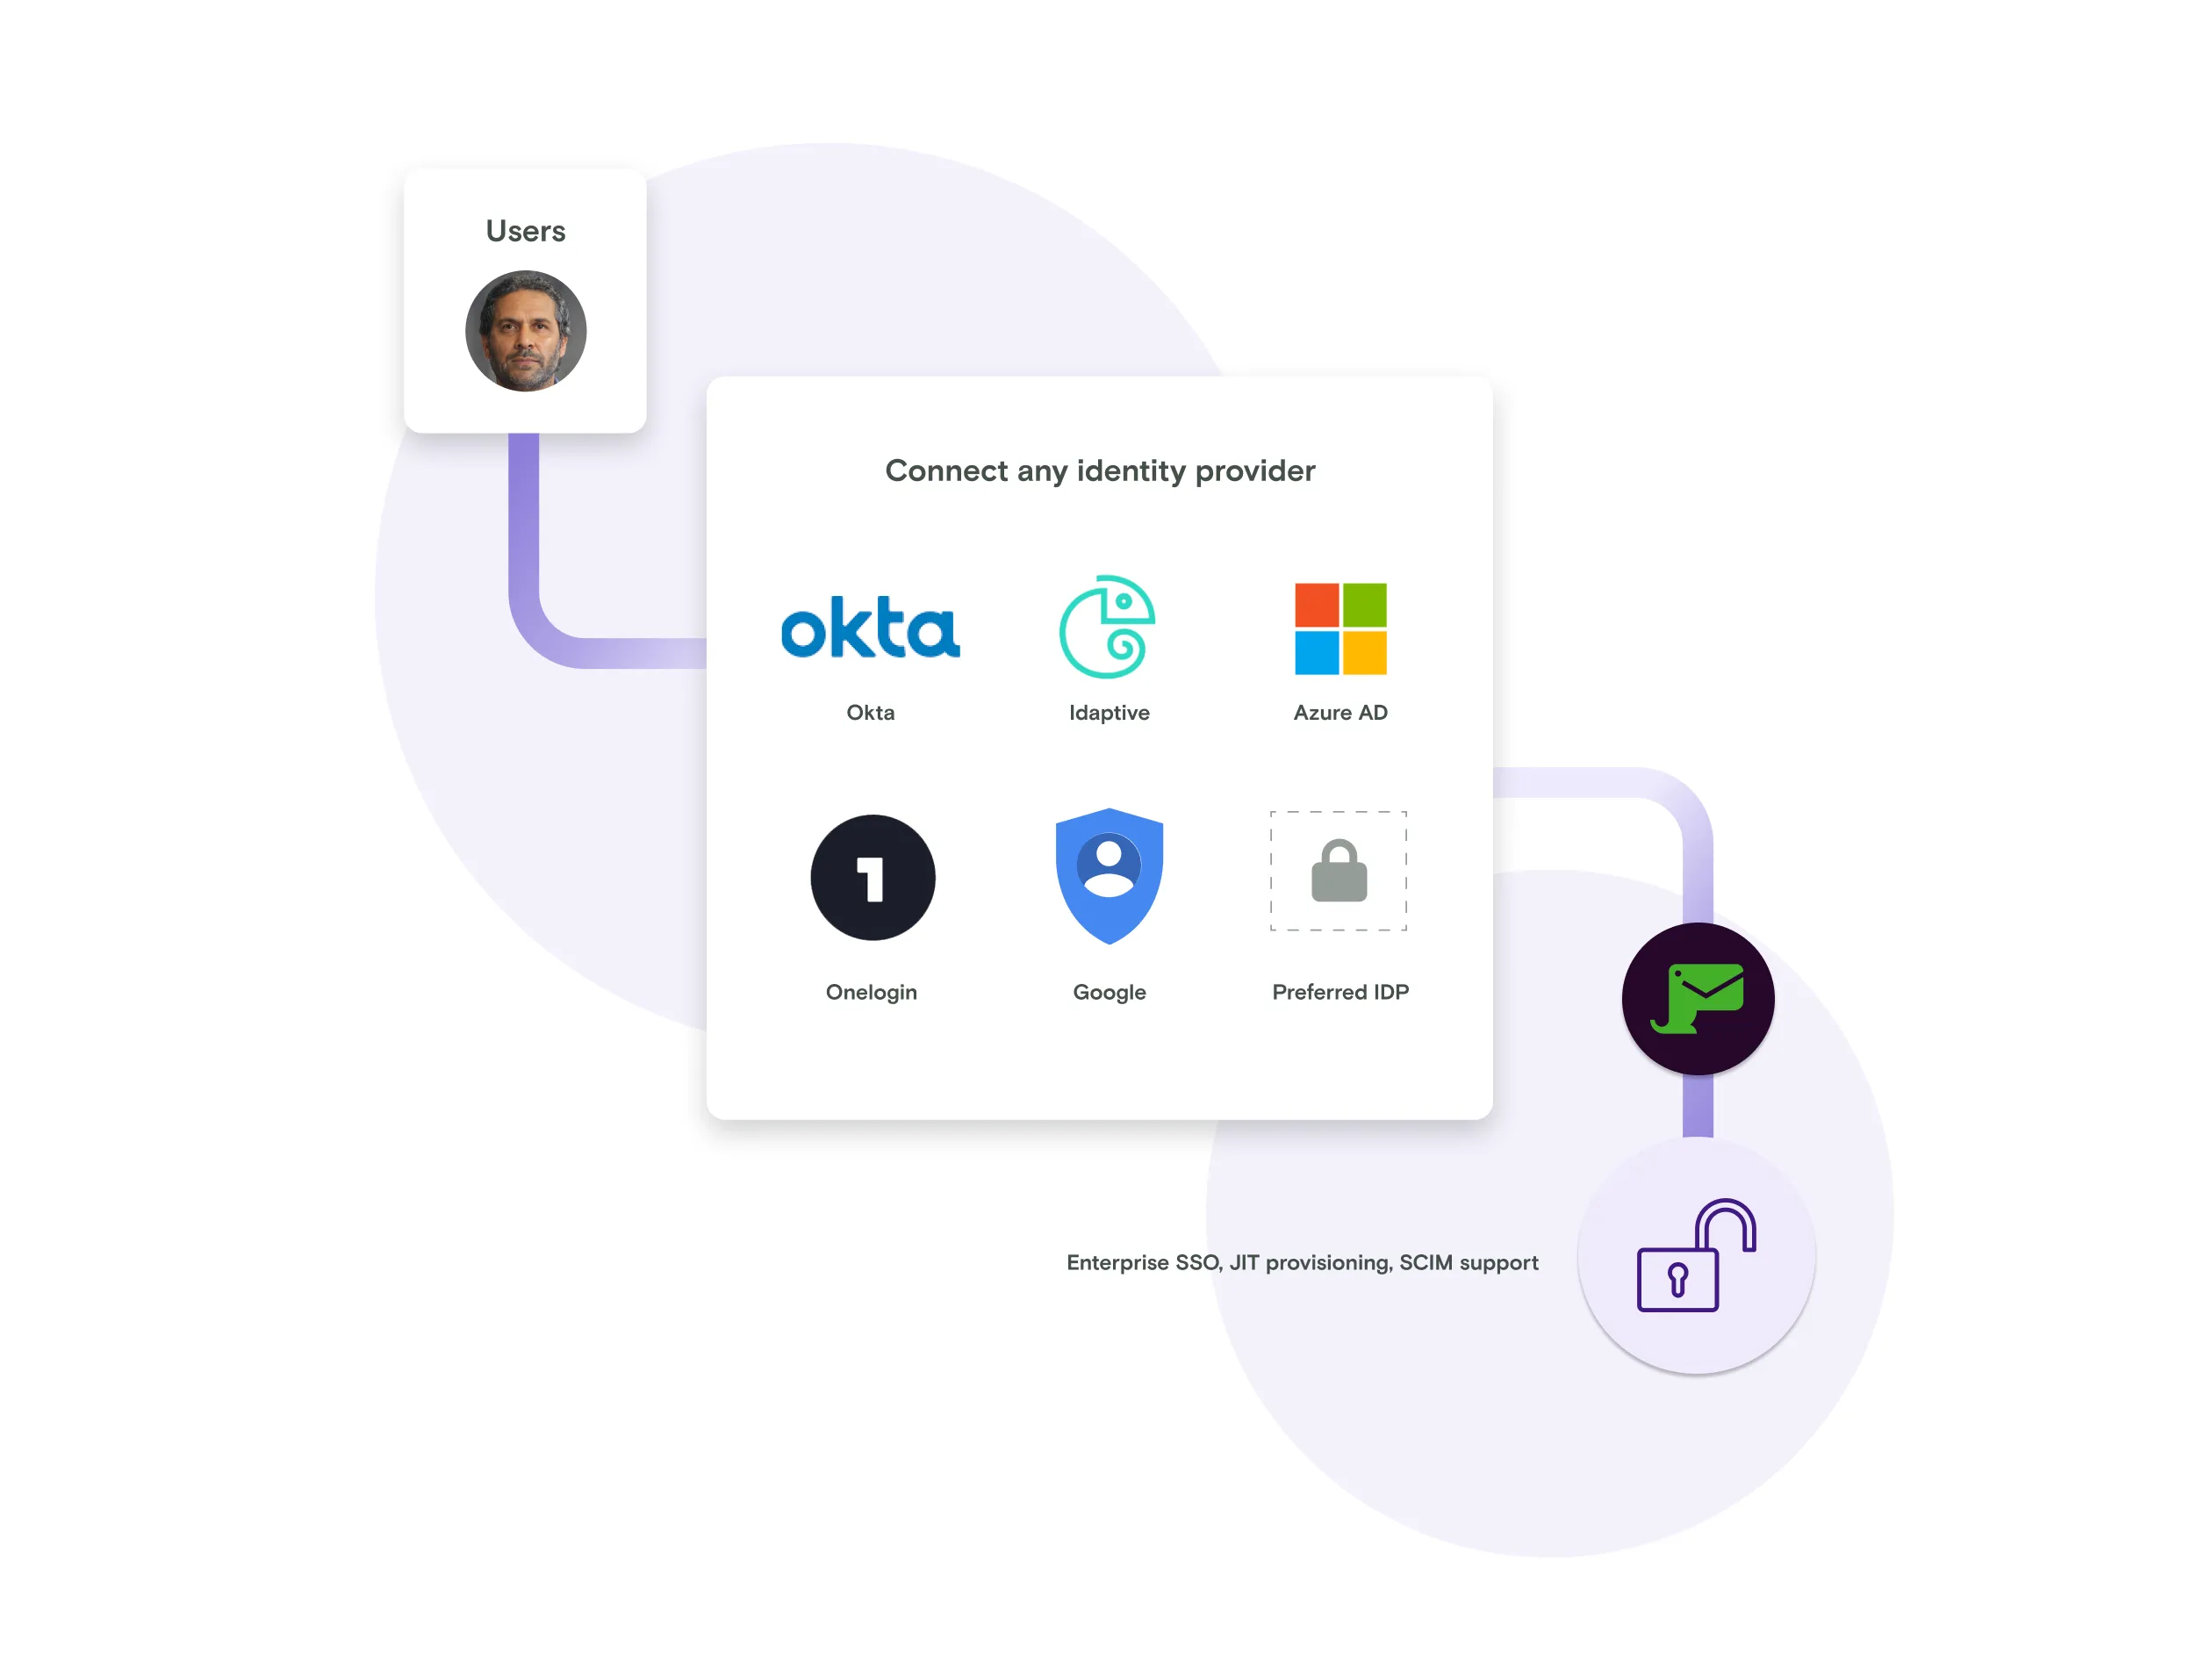 A user connecting to Mailosaur via an identity provider like Okta